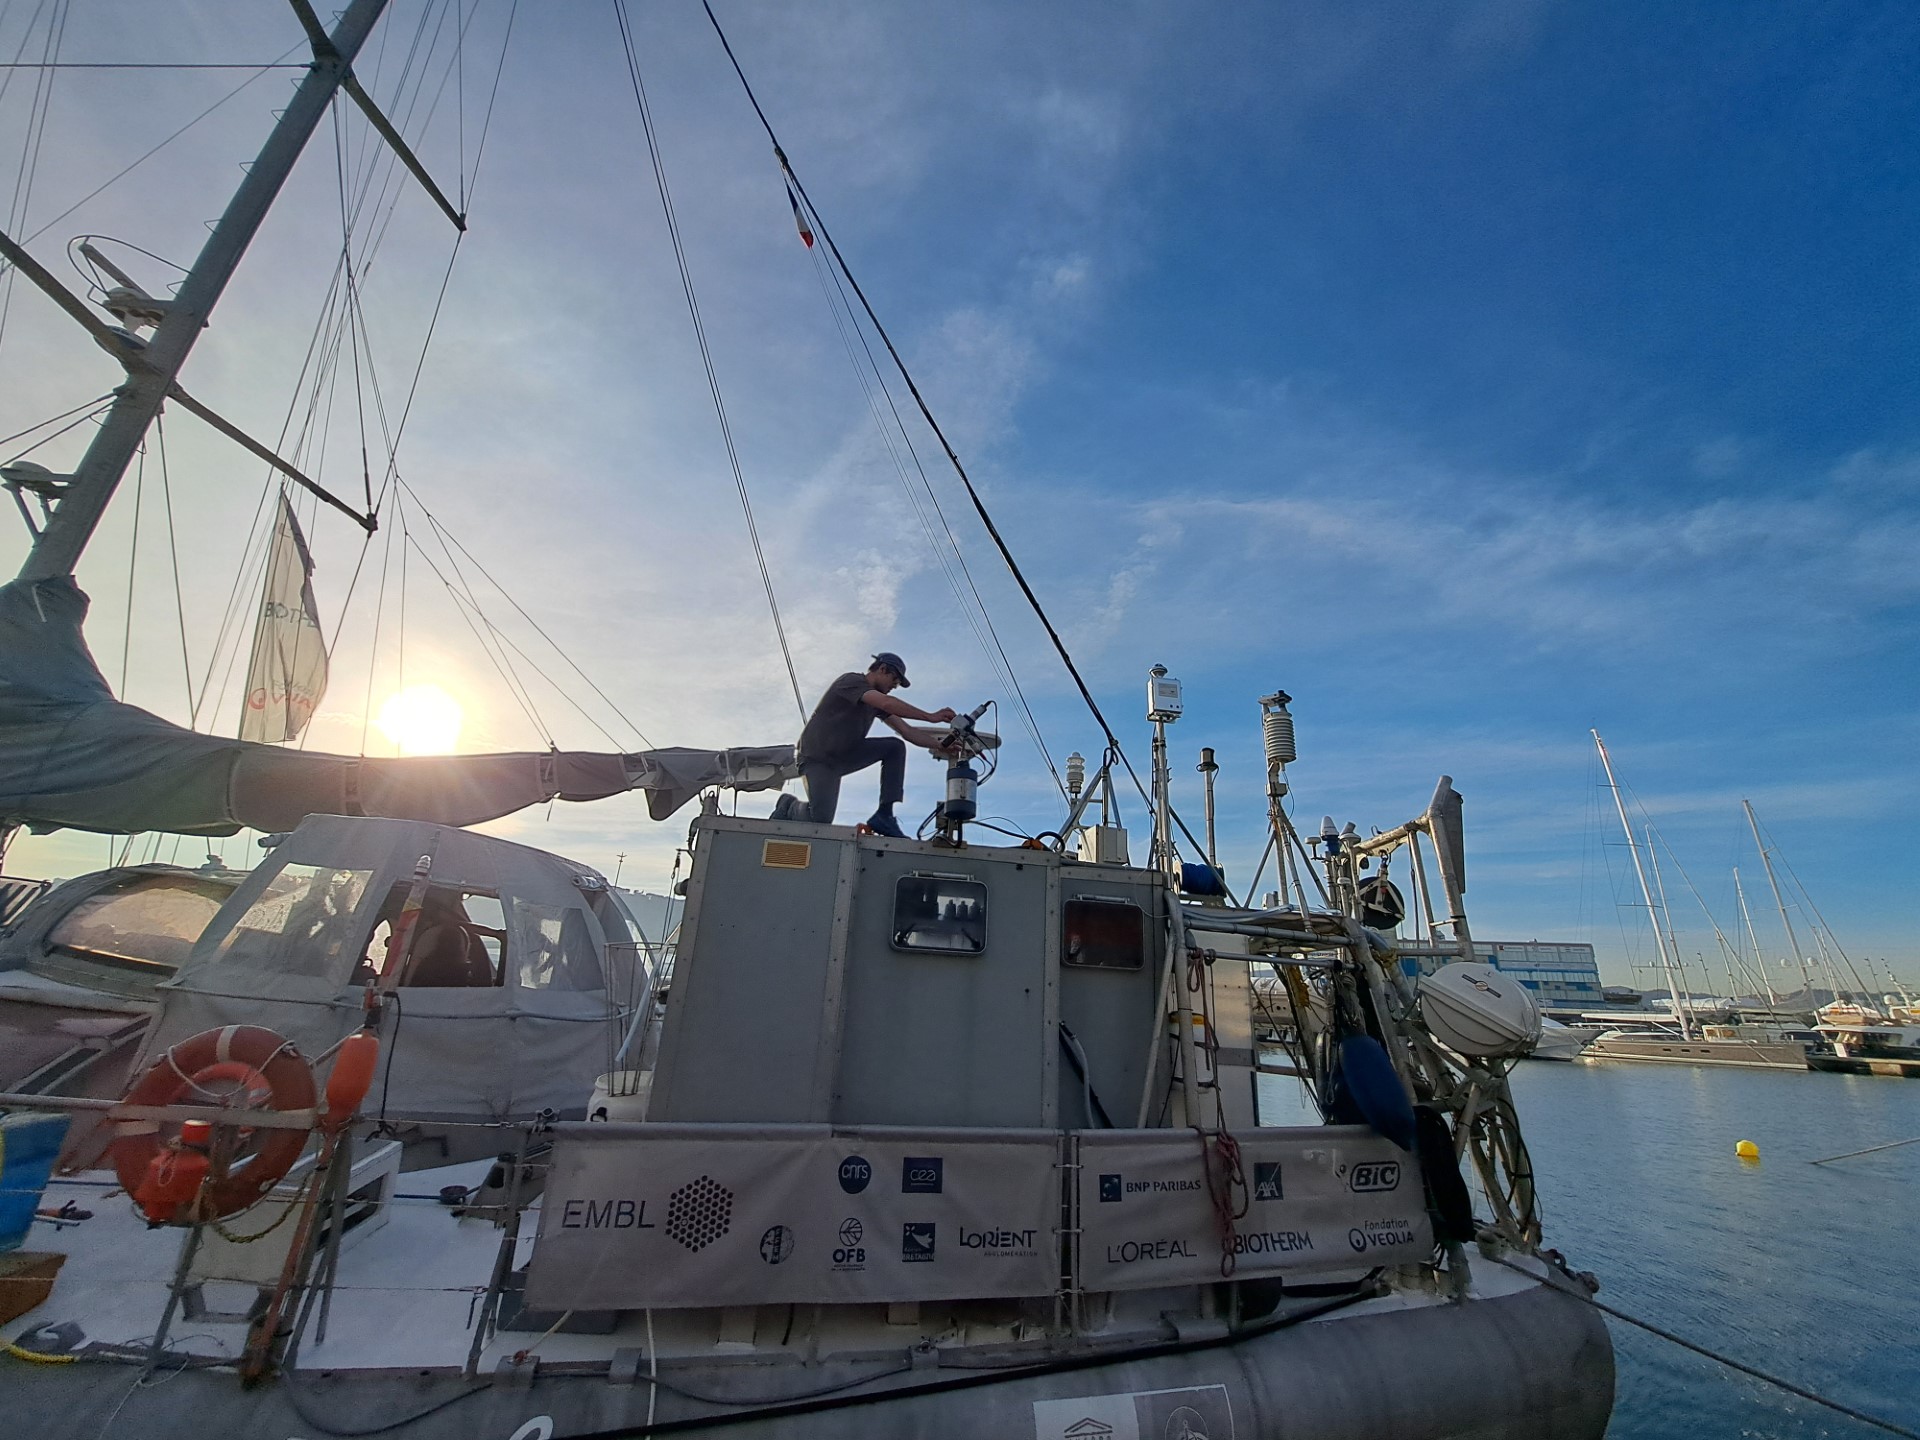 Tom Jordan installing a water radiometry system onboard the Tara Ocean as part of a 2-year survey of European coastal water quality